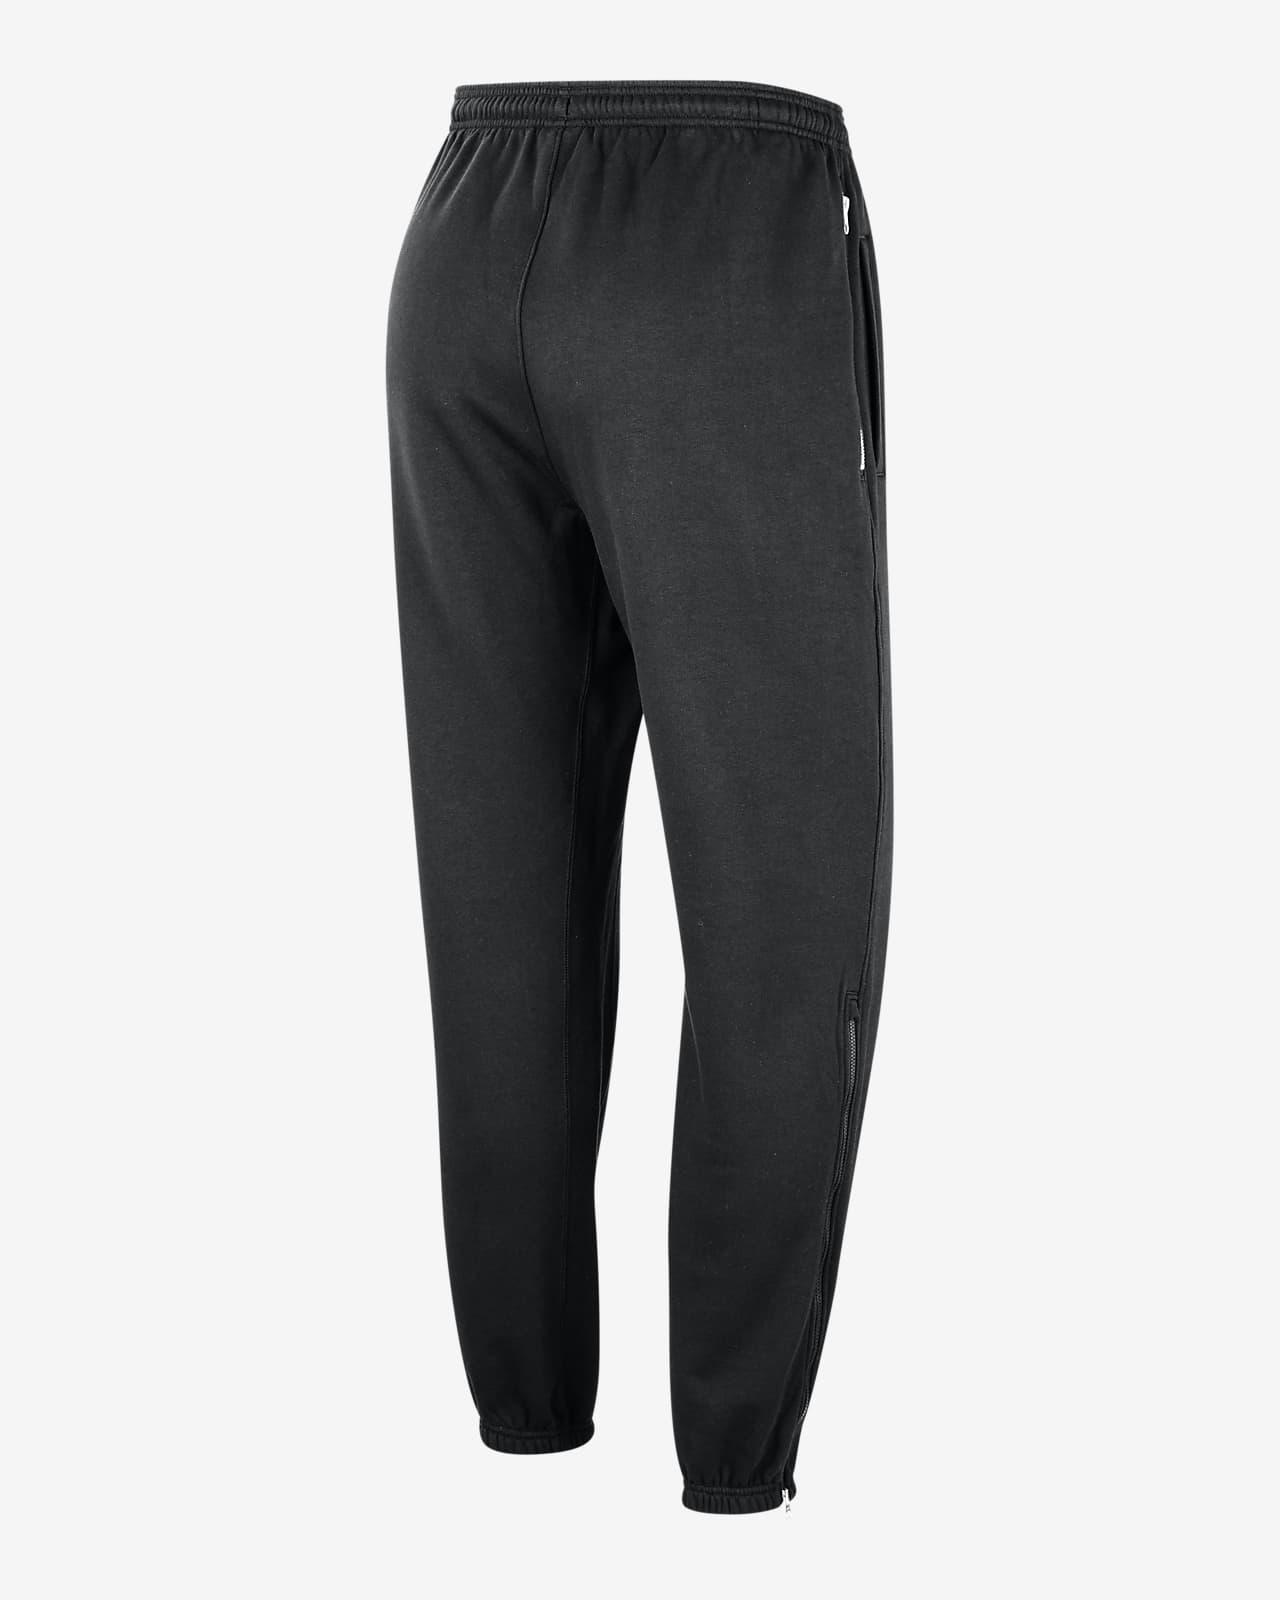 Nike NBA Authentics Compression Pants Men's Black/White Used L 252 - Locker  Room Direct